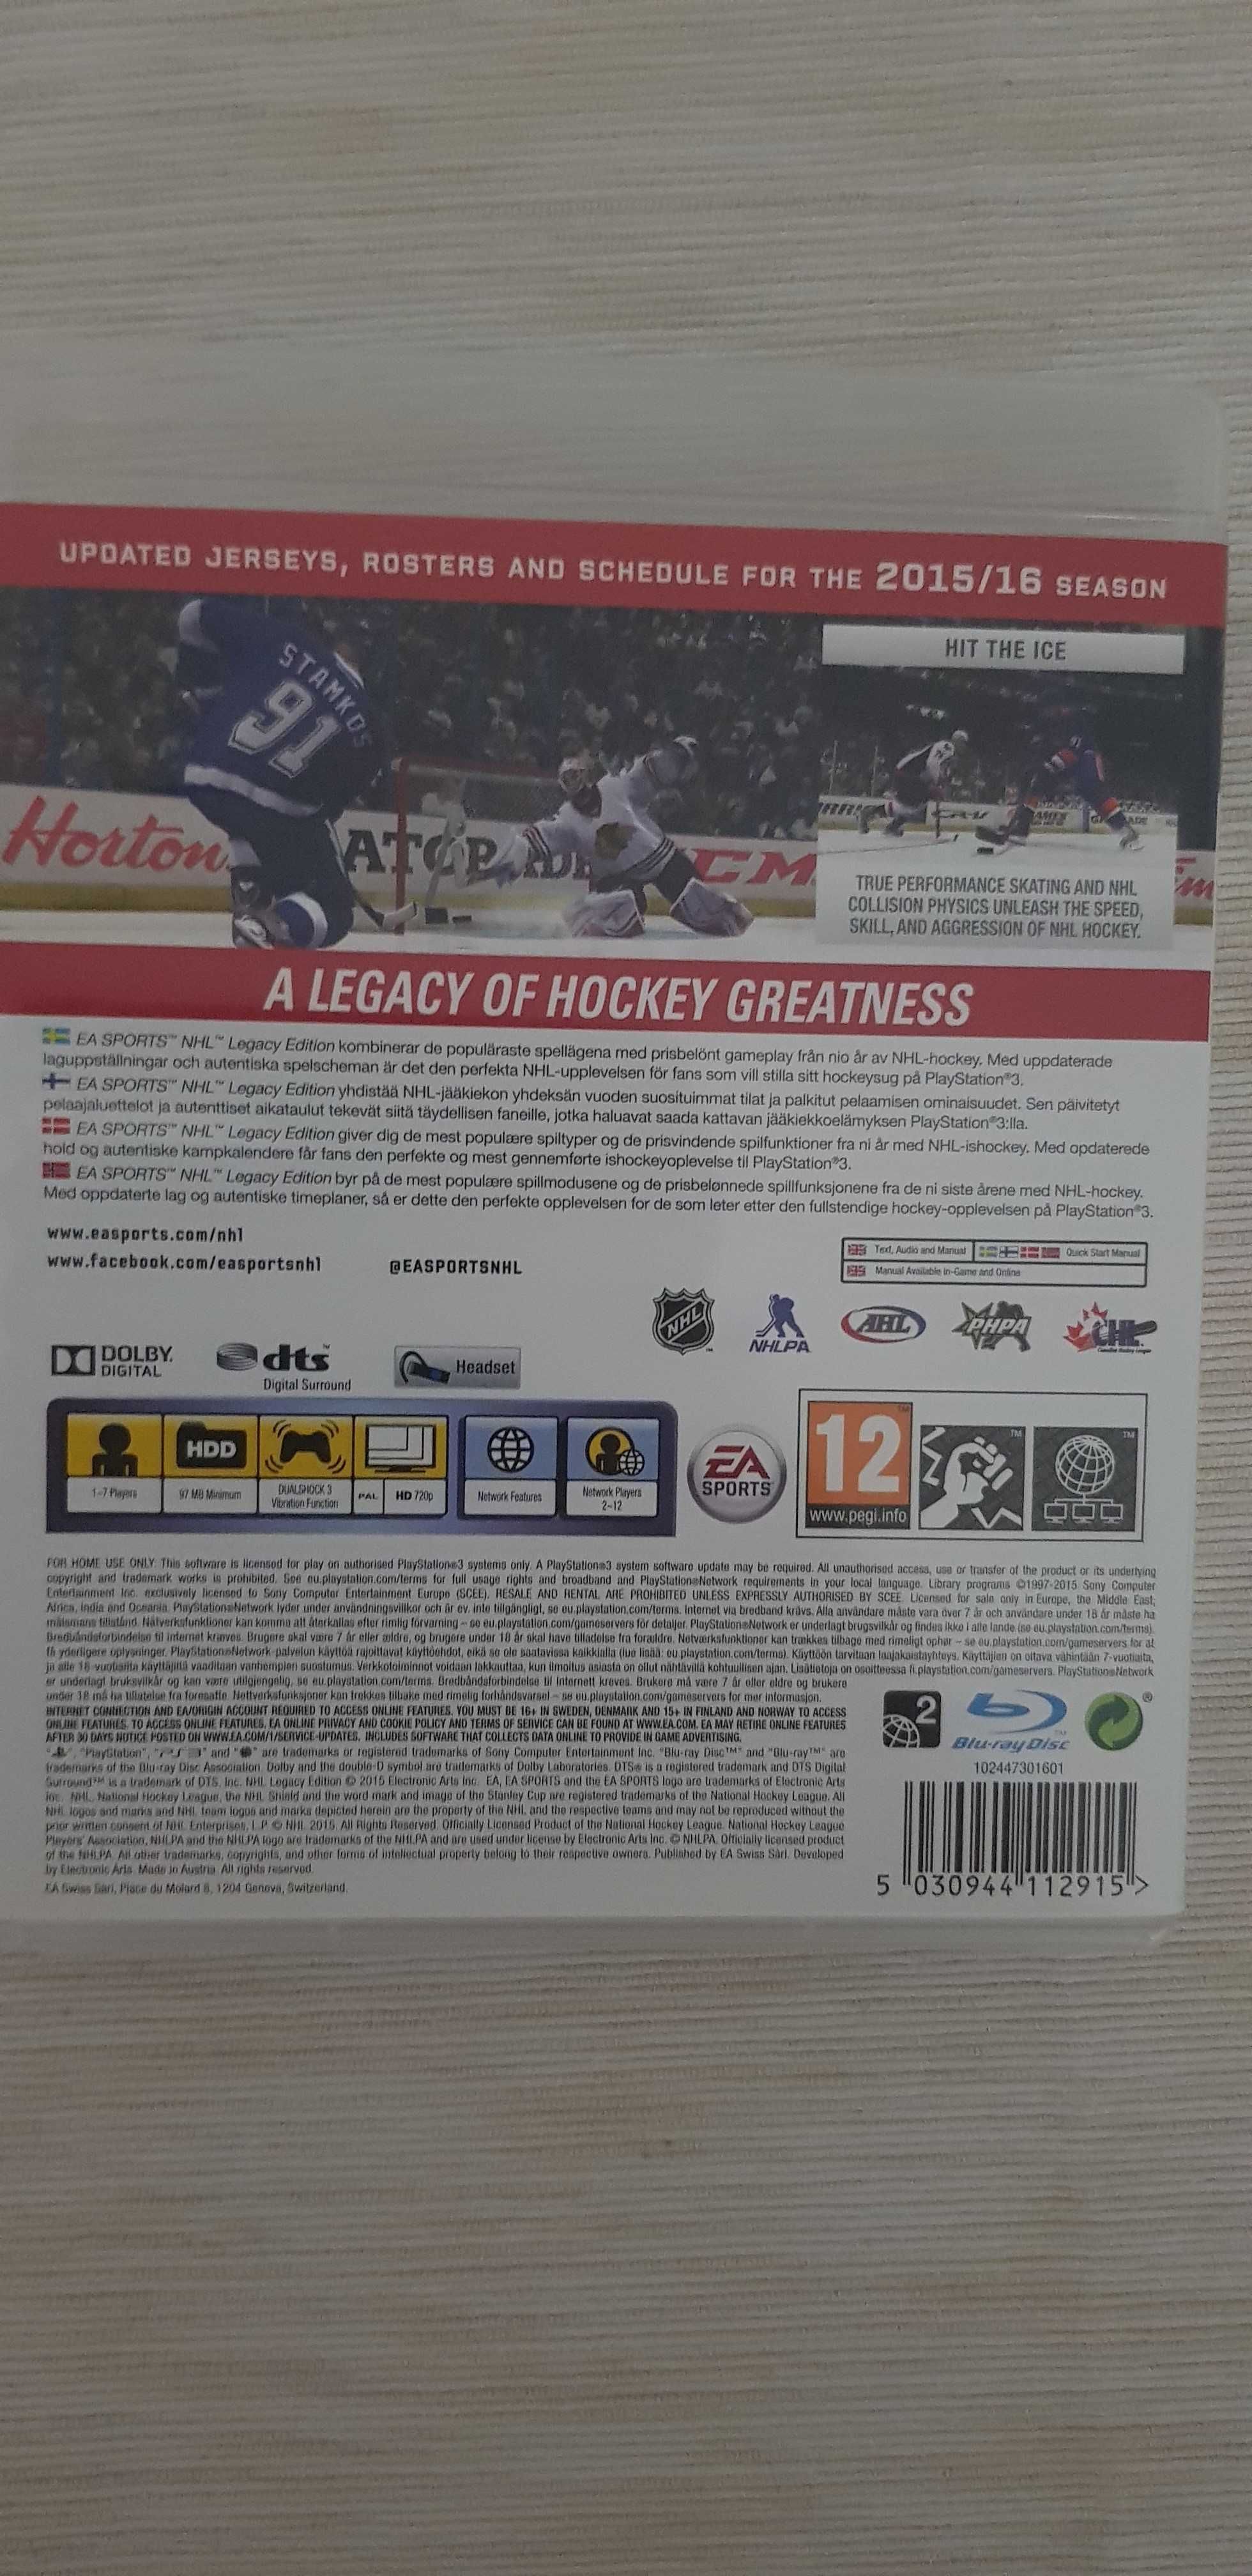 NHL Legacy Edition (Gra PS3)